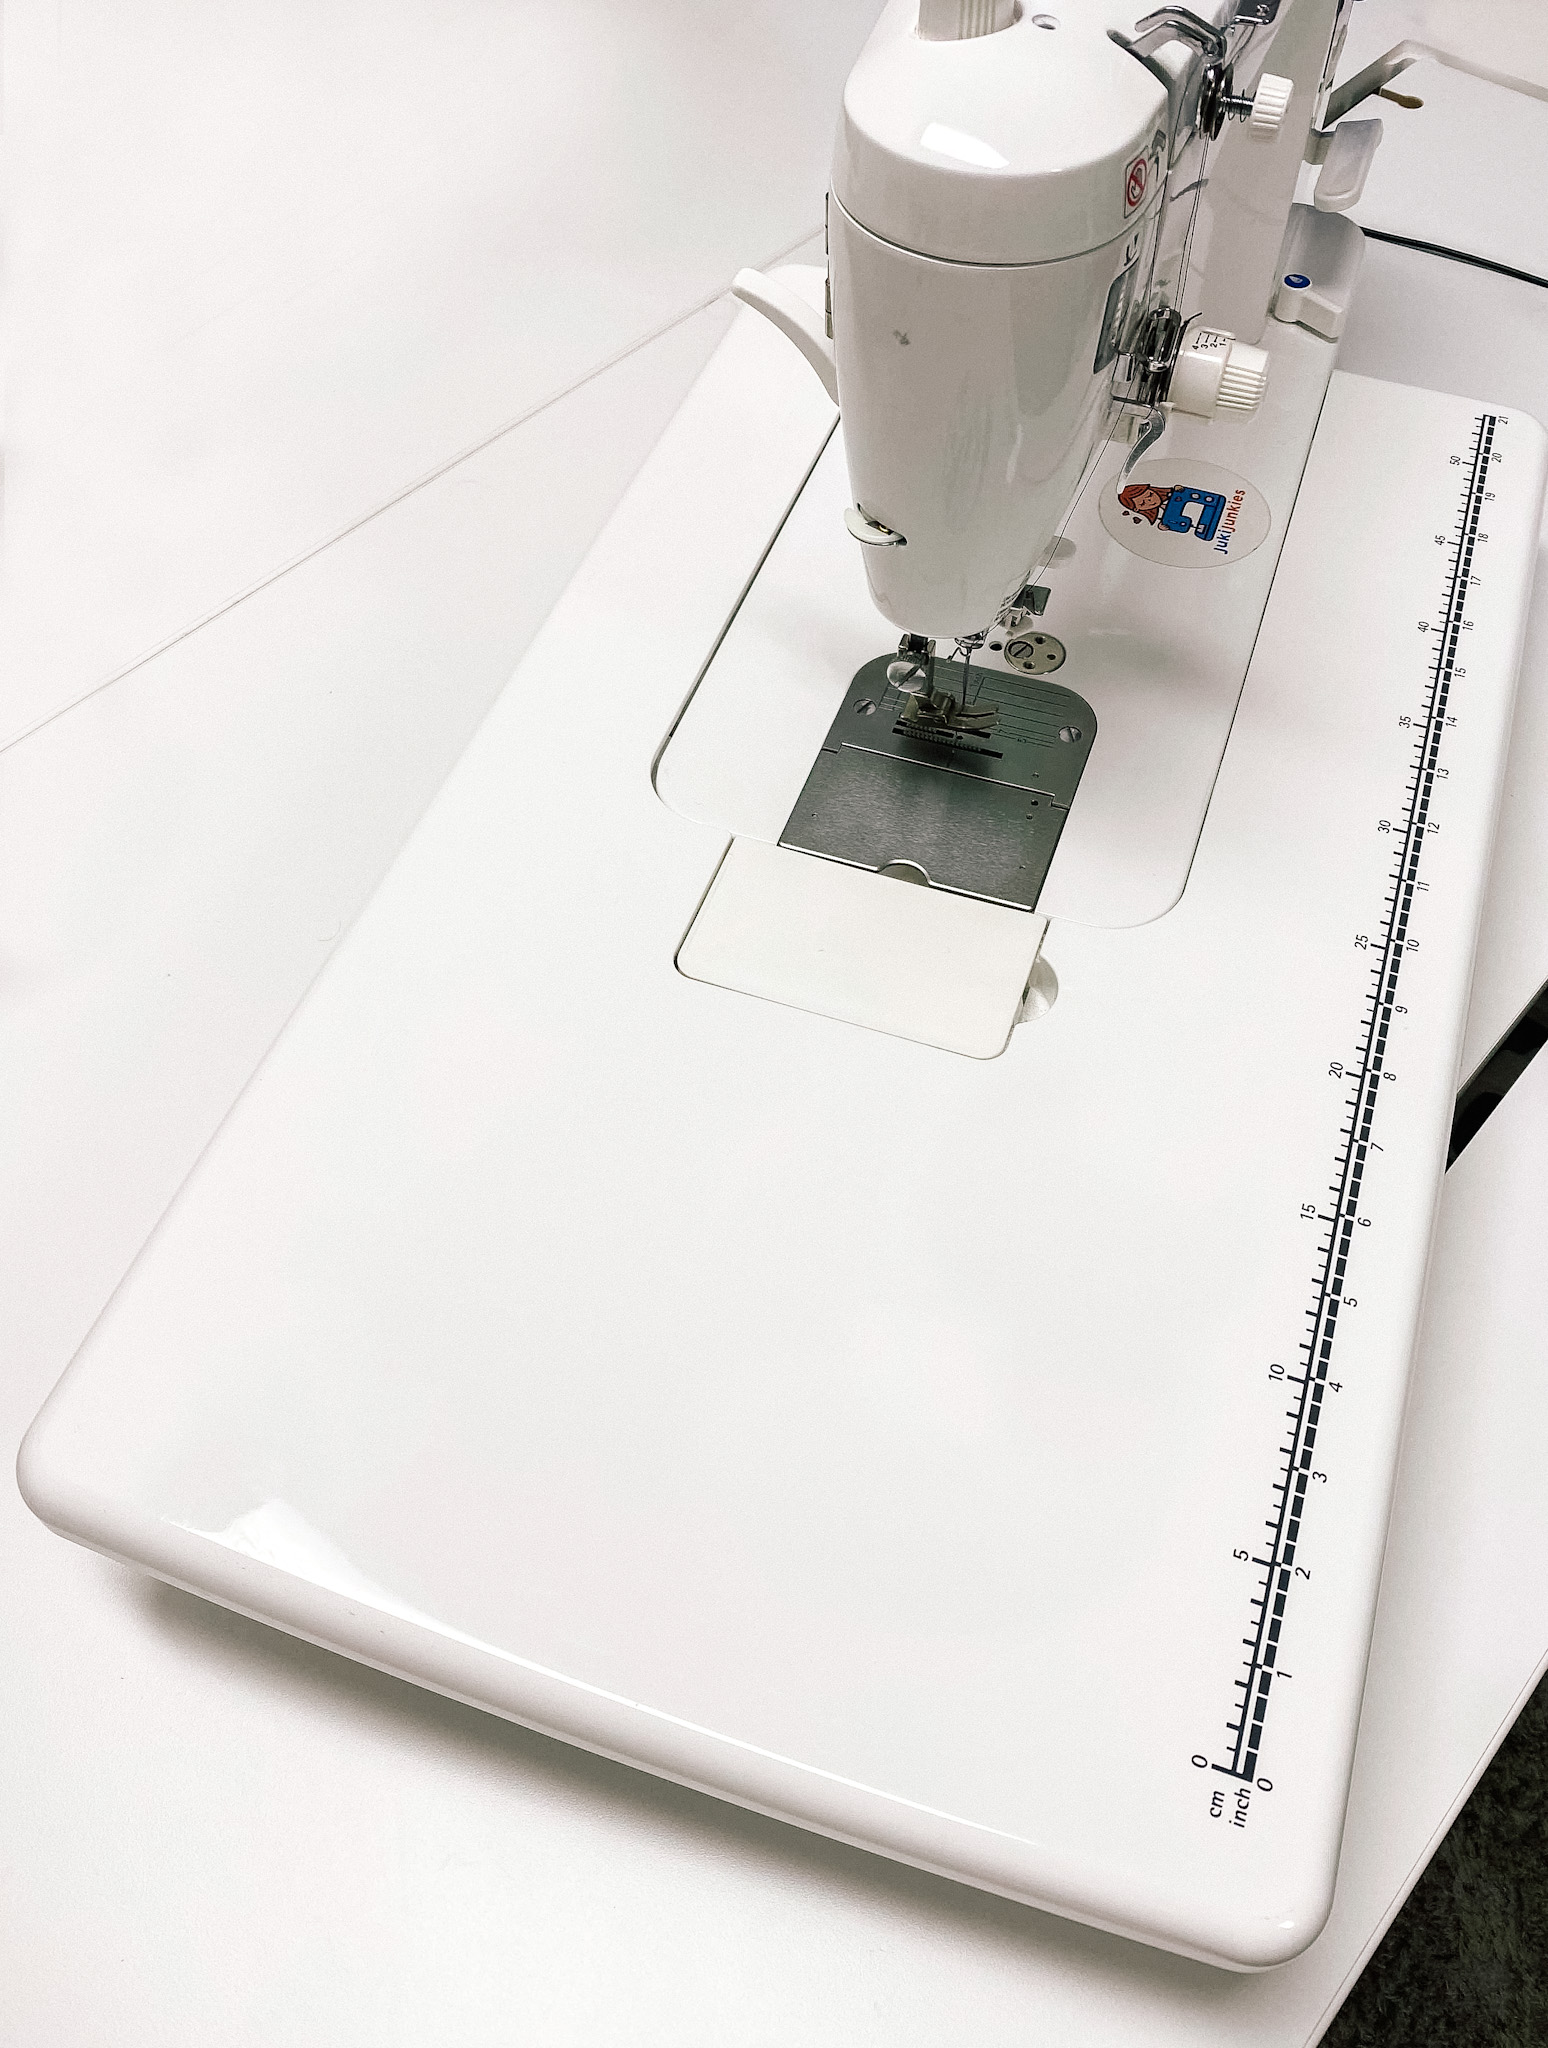 10 Juki Sewing Machine M Size Aluminum Bobbins with Slot #107-23609